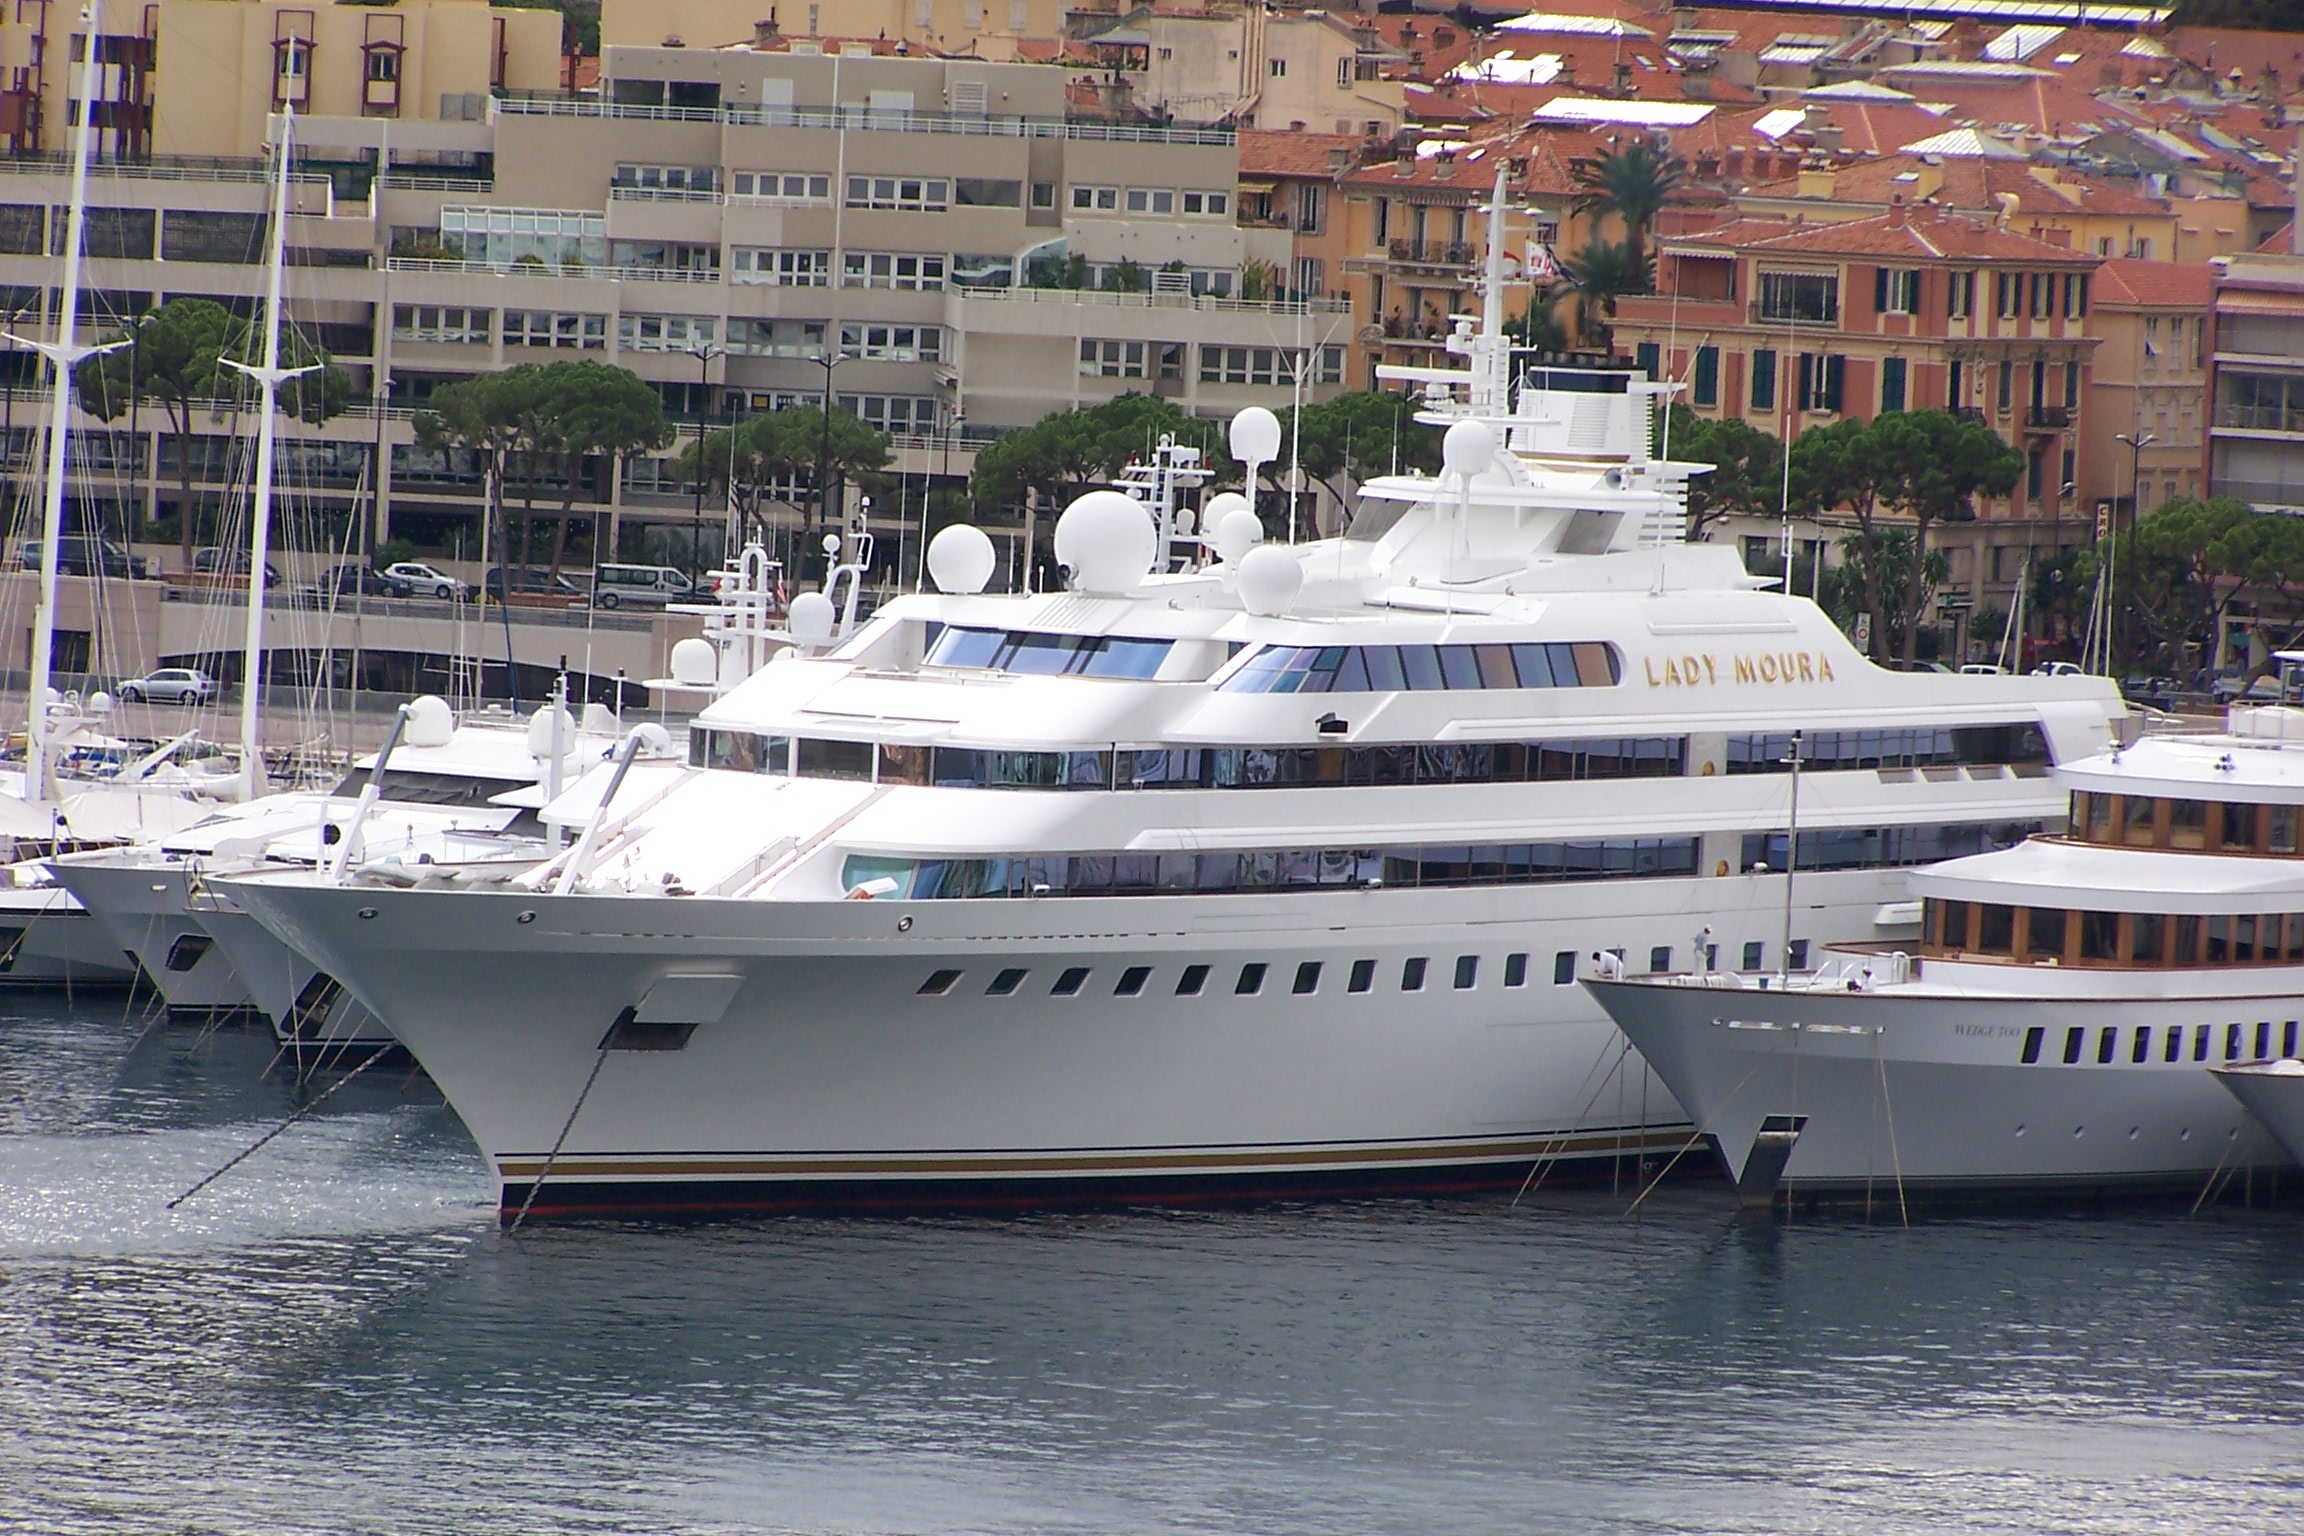 Archivo:Yacht Lady Moura in Monaco.jpg - Wikipedia, la enciclopedia libre